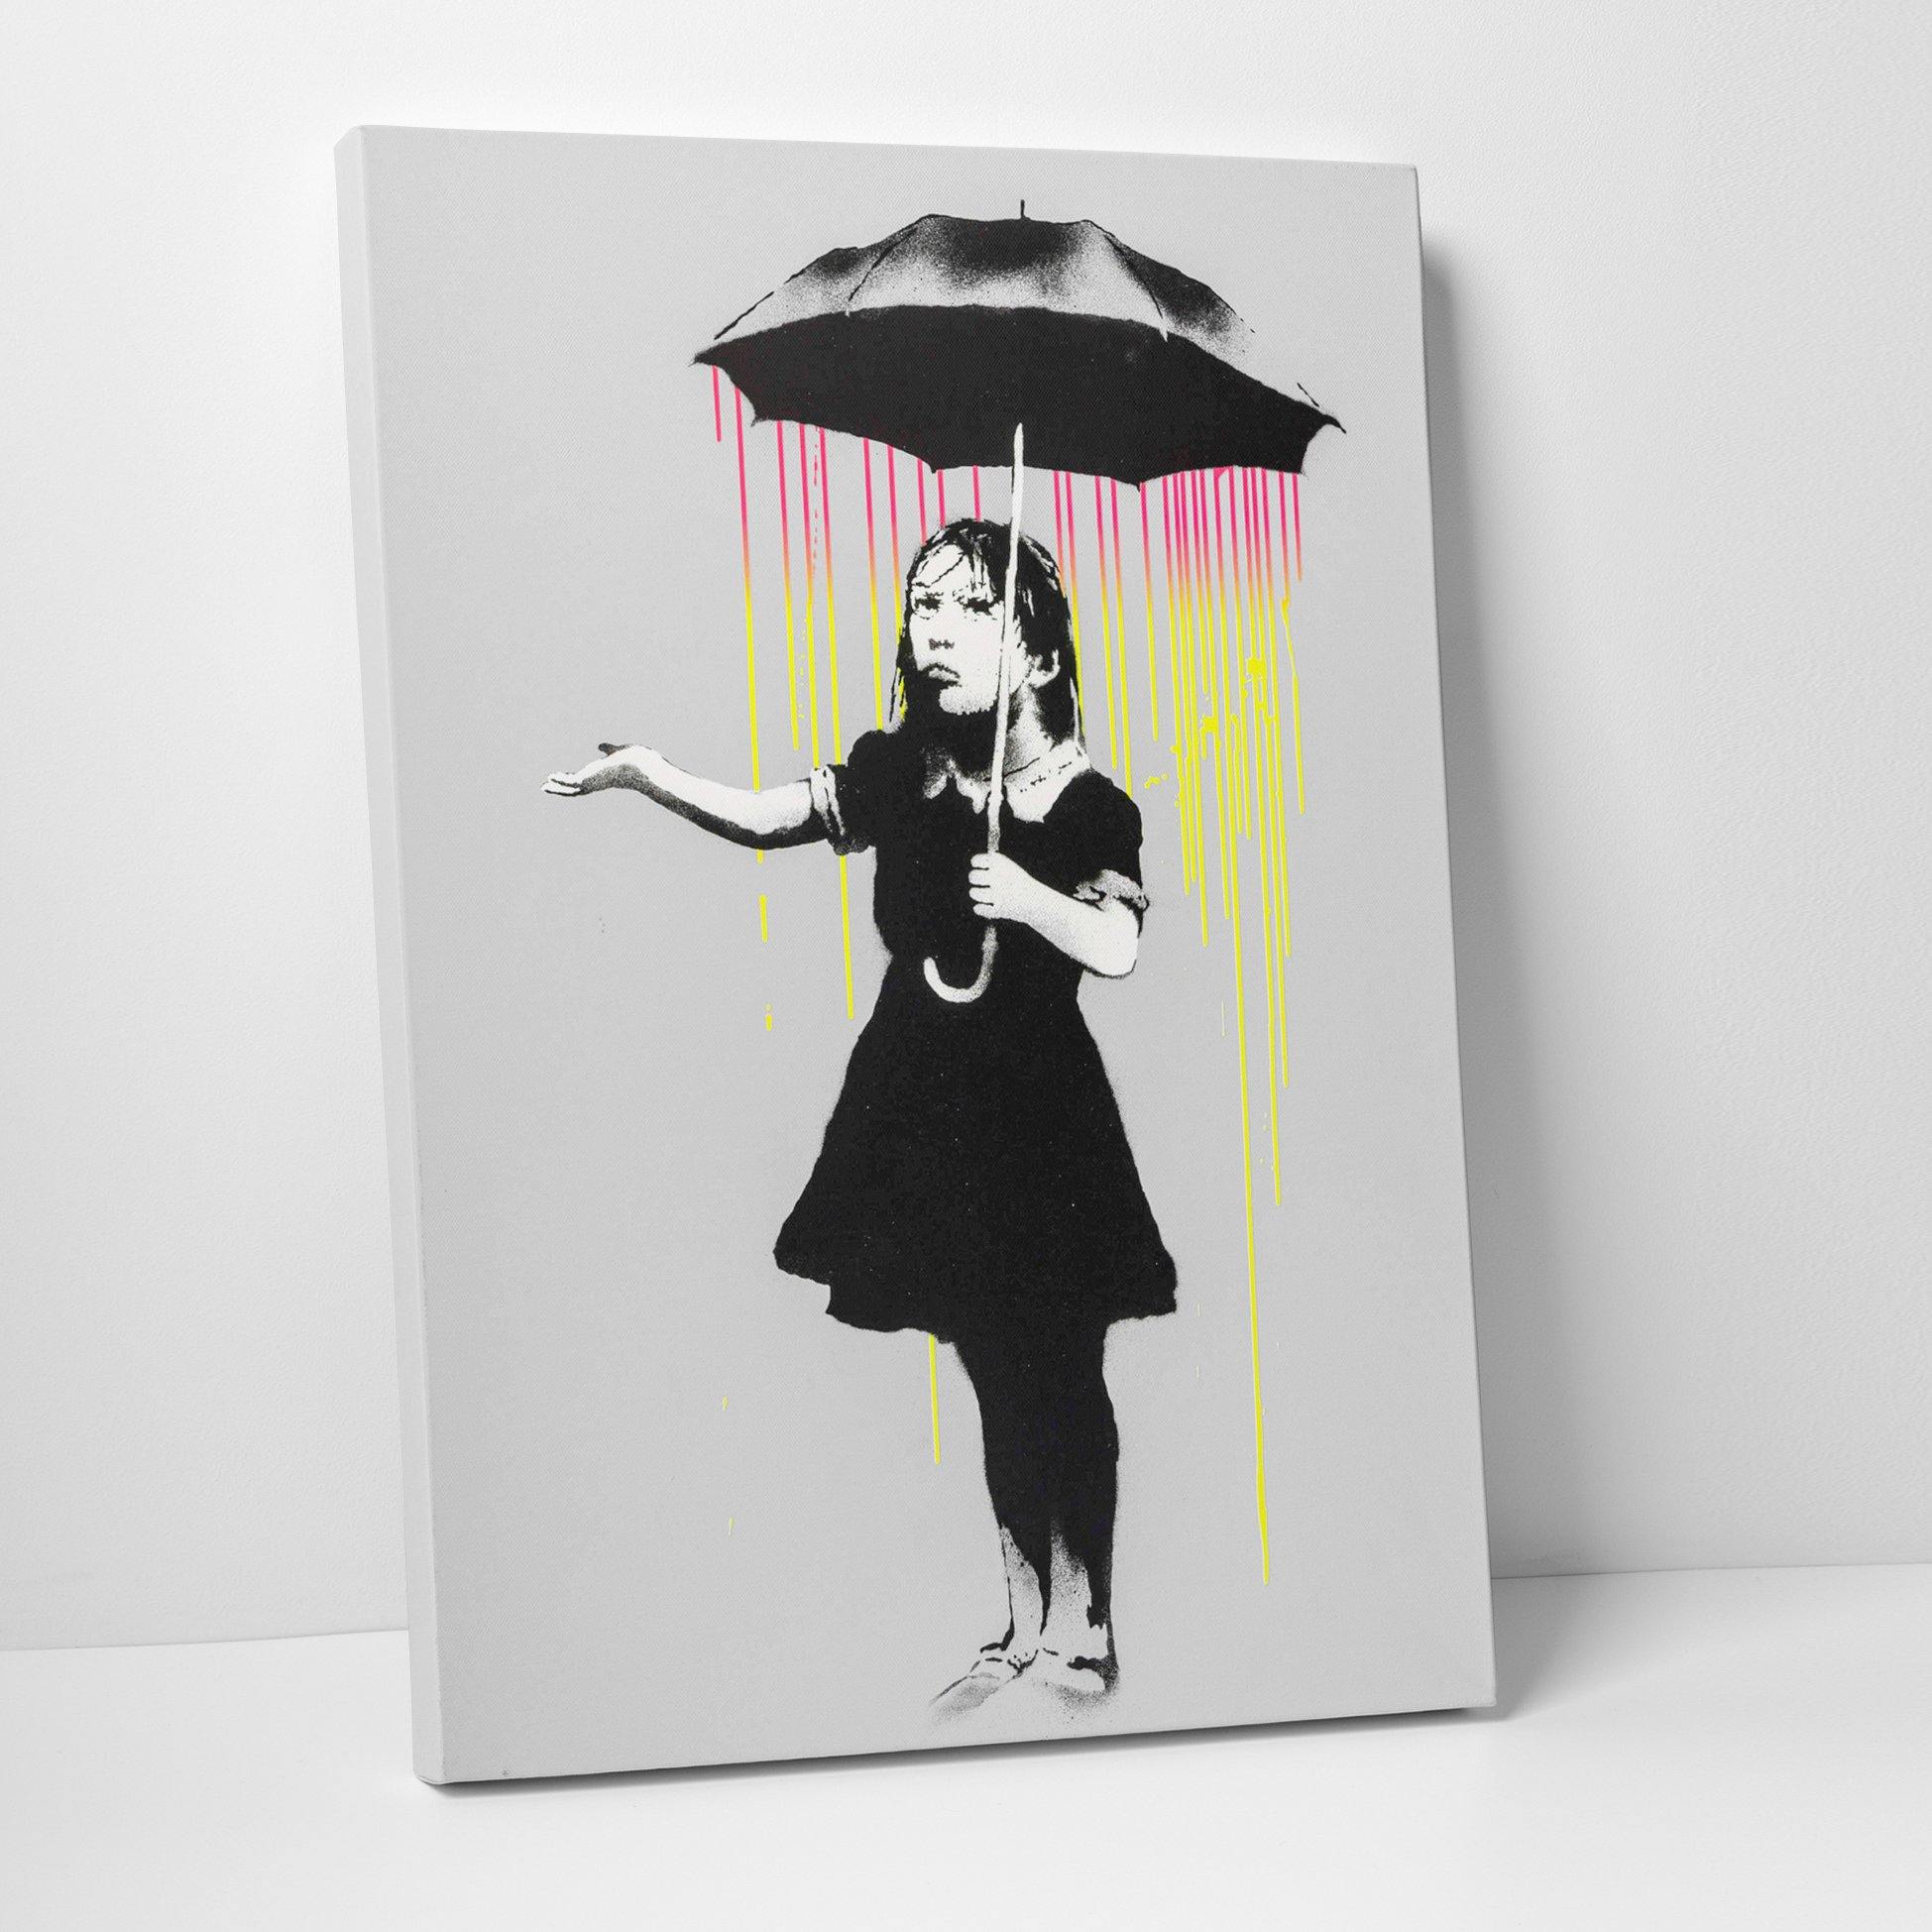 Banksy - Umbrella Girl (NOLA) Wall Art Canvas - SharpWallArts